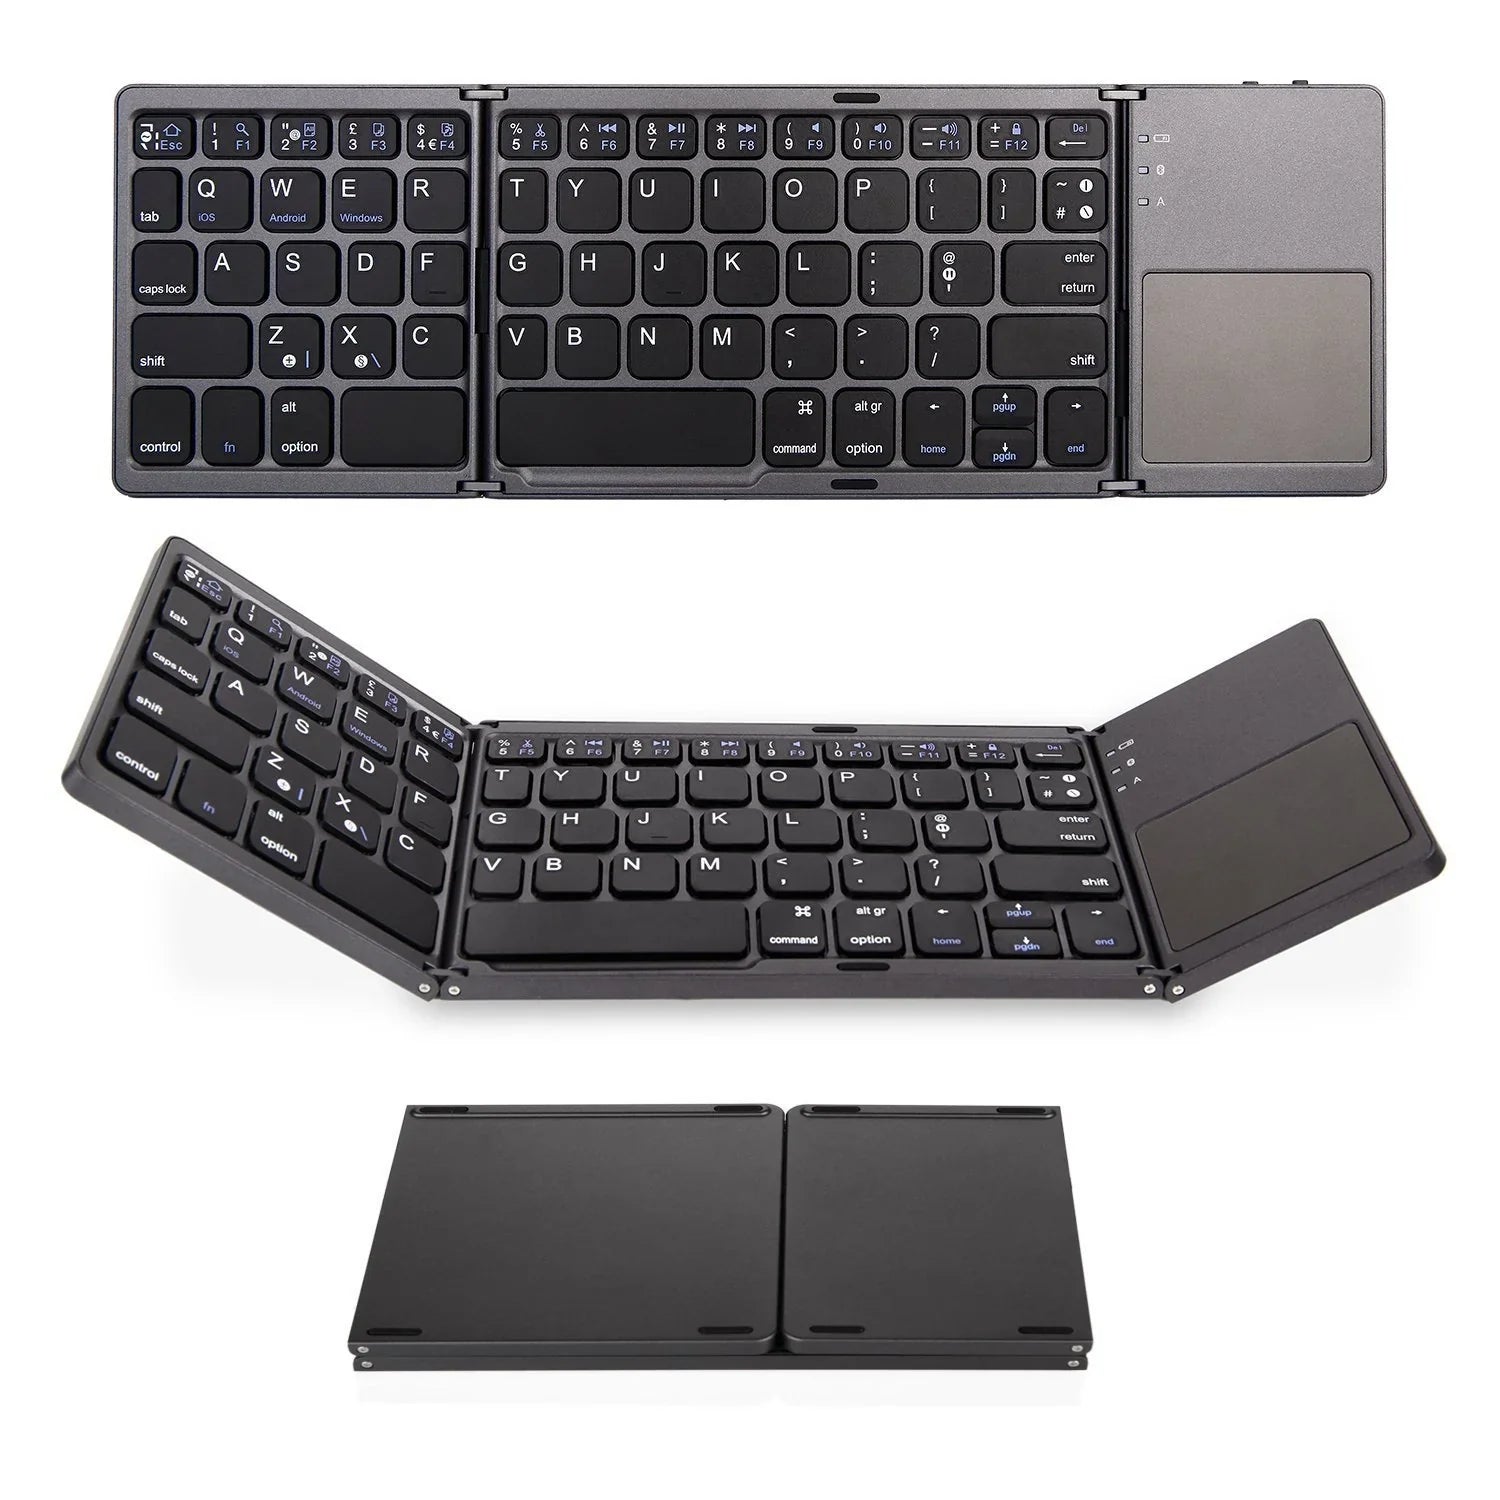 Mini Wireless Keyboard With Touchpad B033 Three store